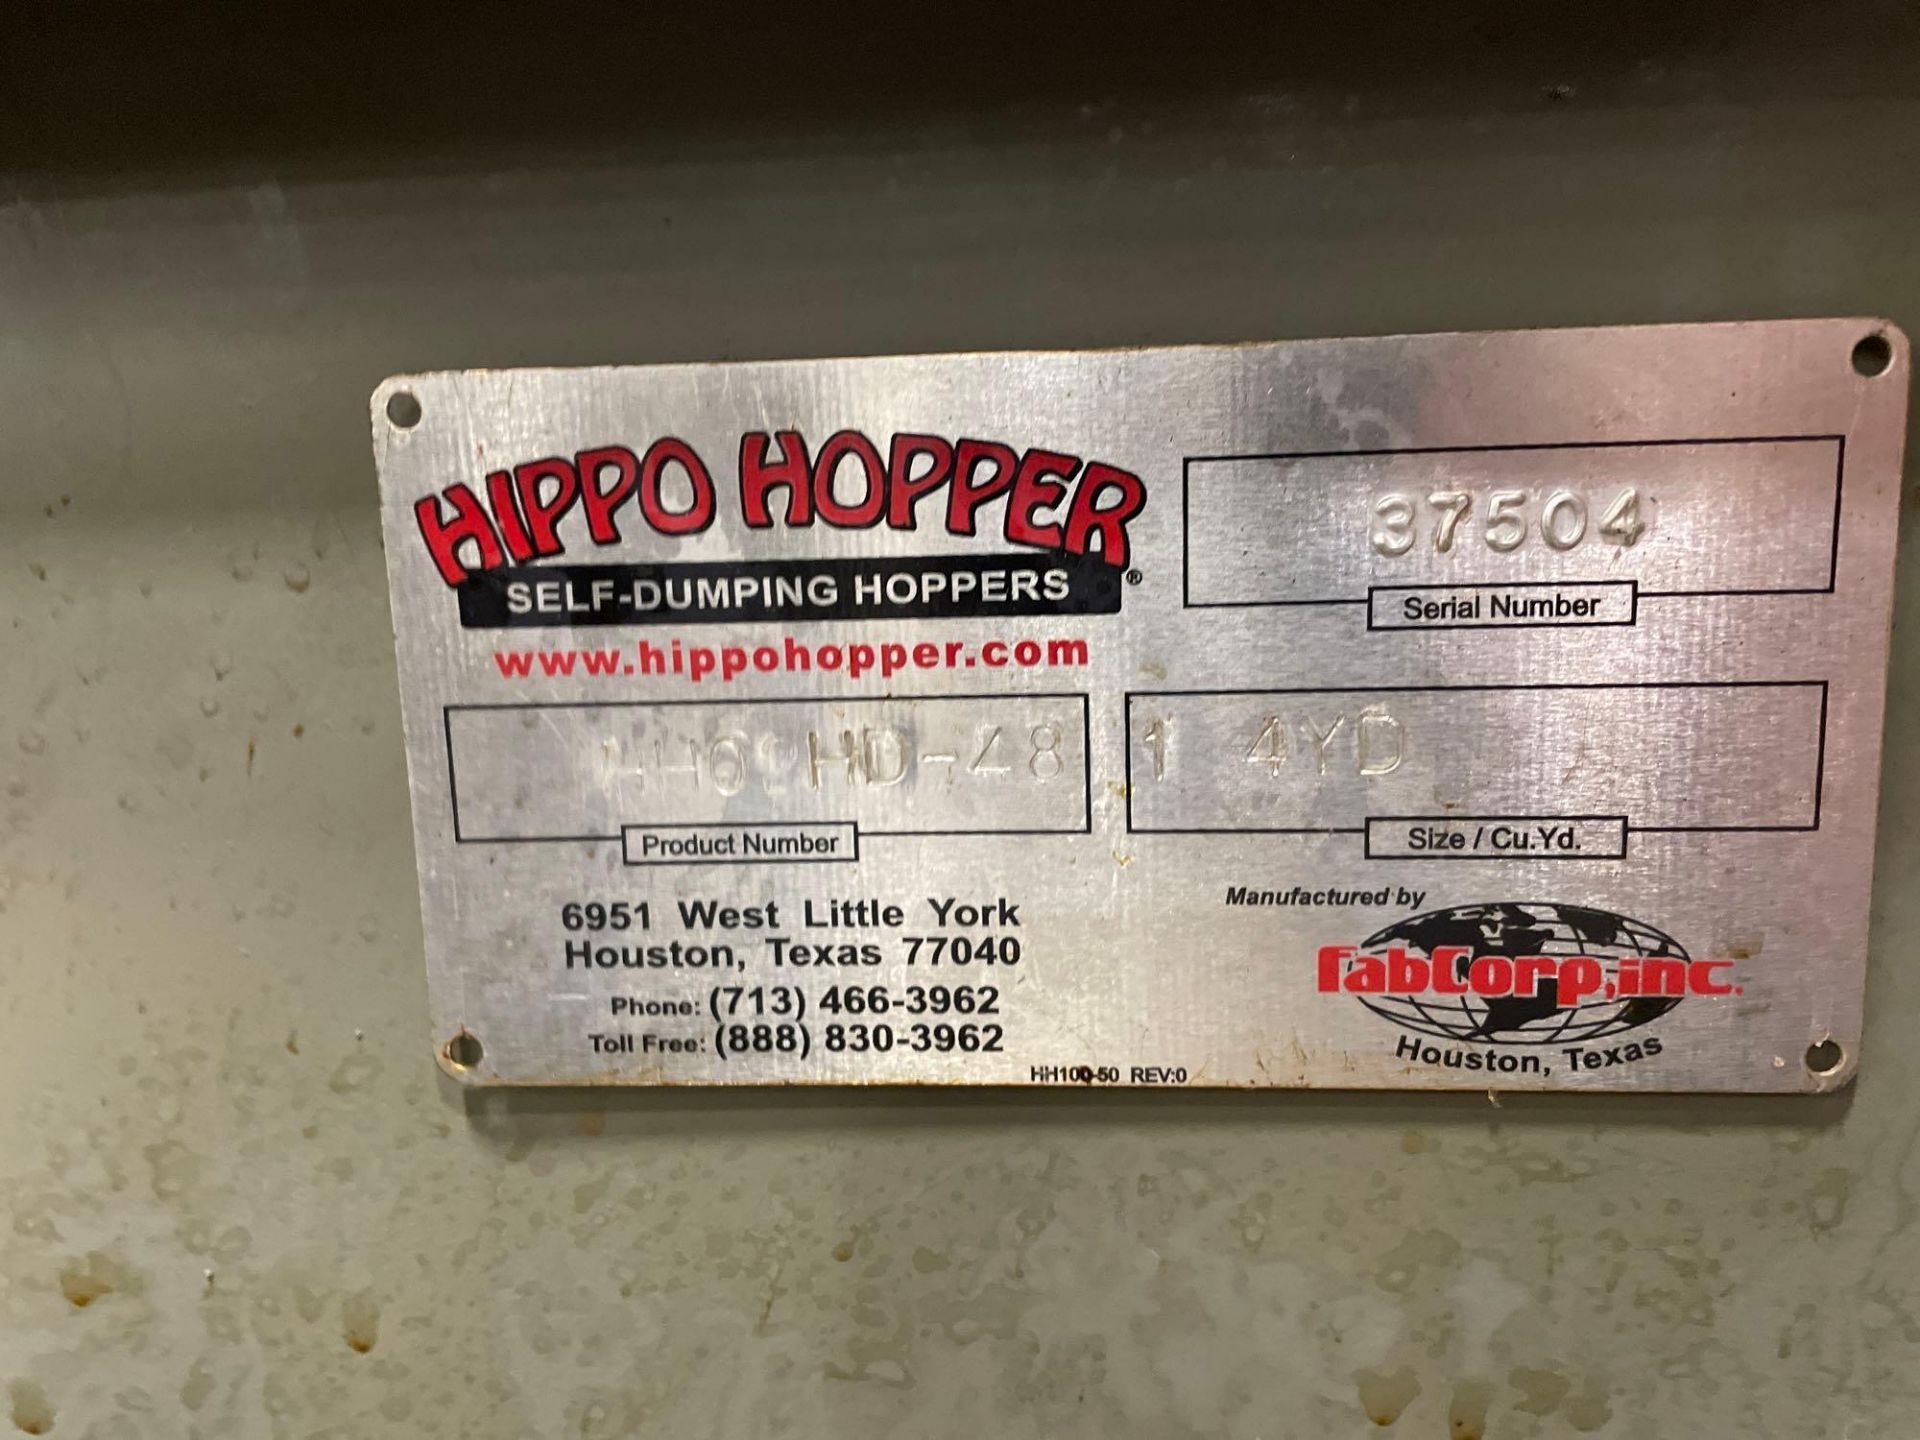 FabCorp 4-Yard HH02HD-48 Hippo Hopper Portable Self Dumping Hopper S/N 37504 - Image 6 of 9